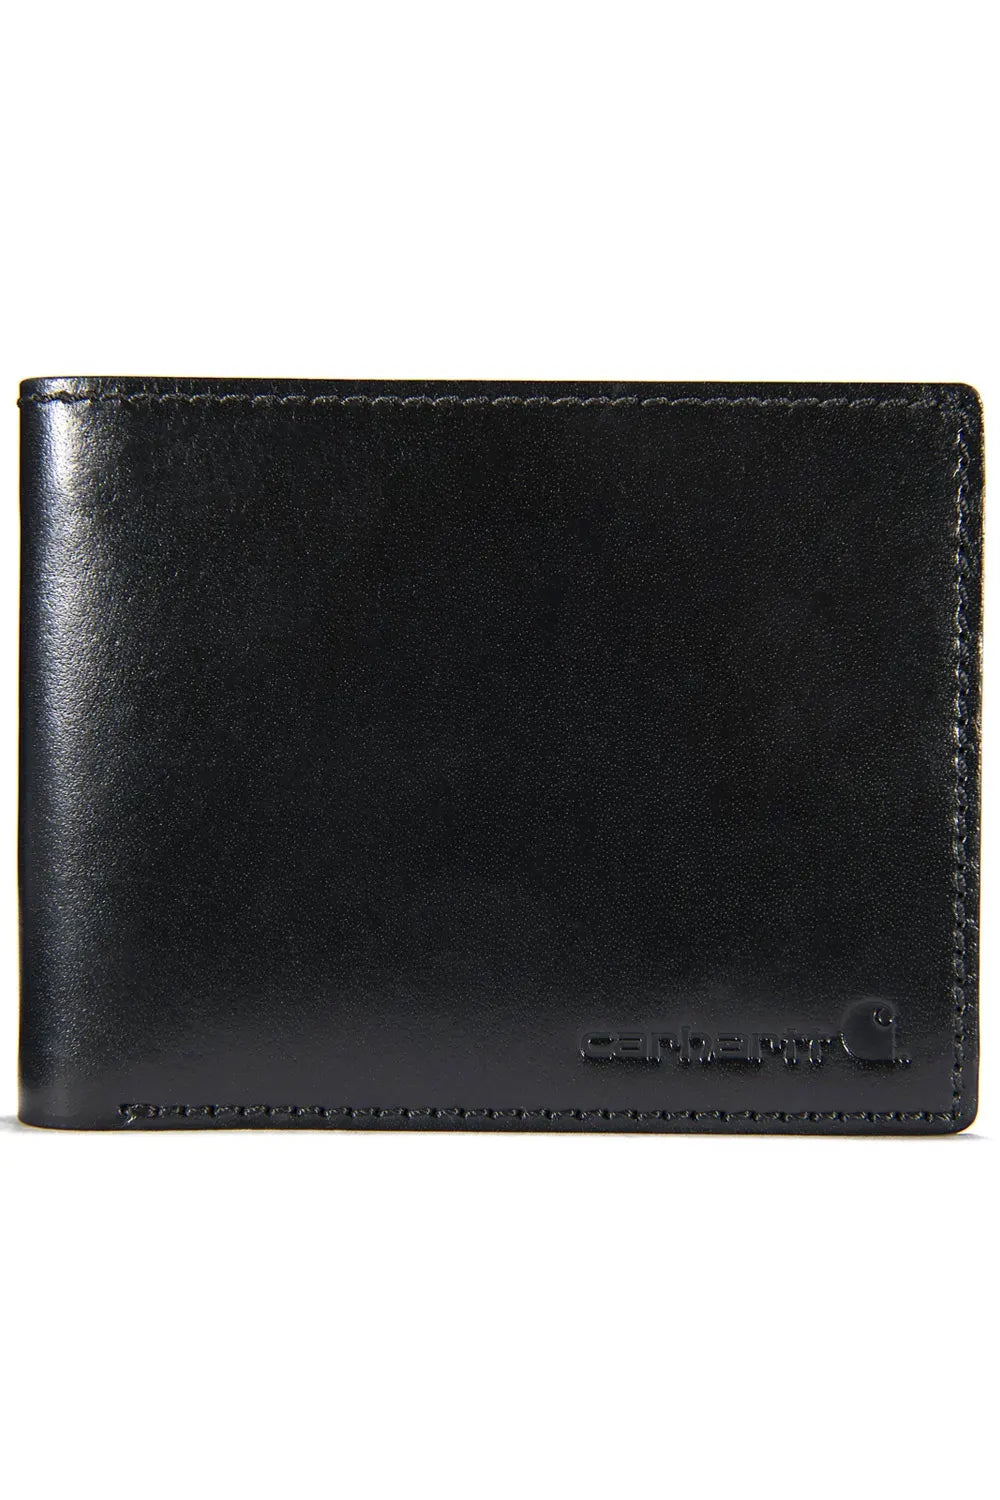 Carhartt B0000204-001 Rough Cut Bi-Fold Wallet in Black front closed